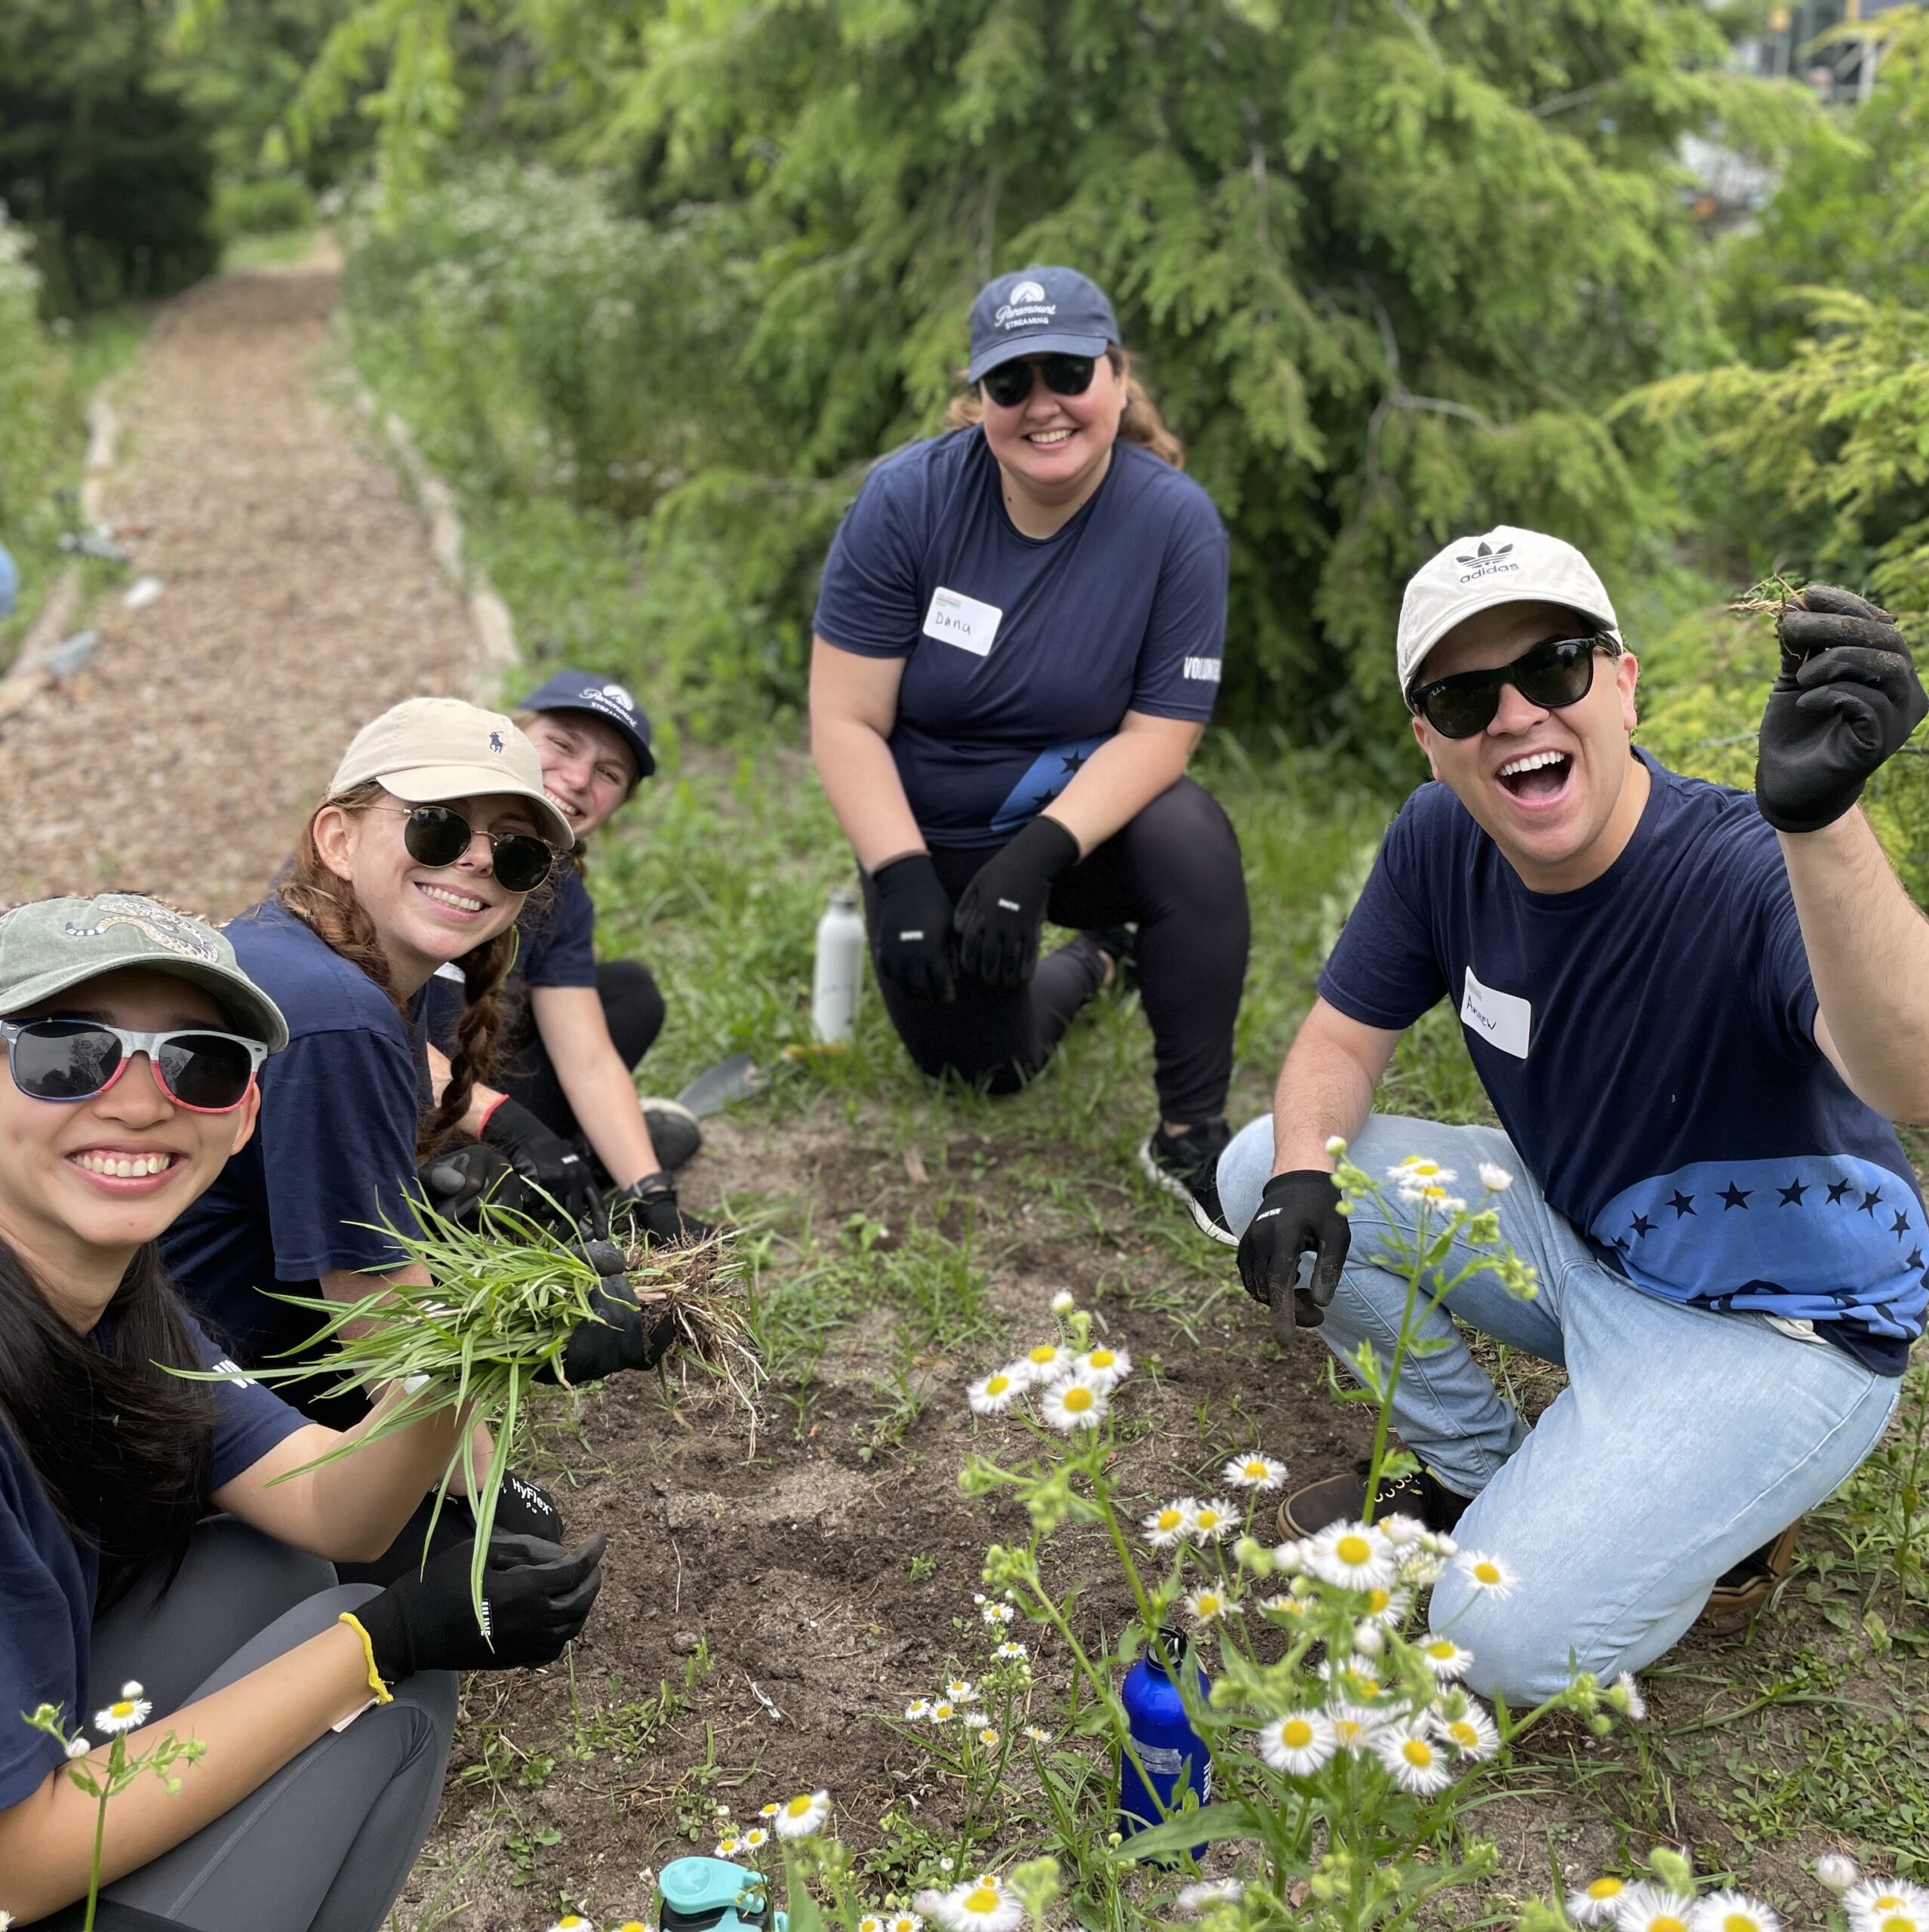 Five volunteers from Paramount working in a Park garden